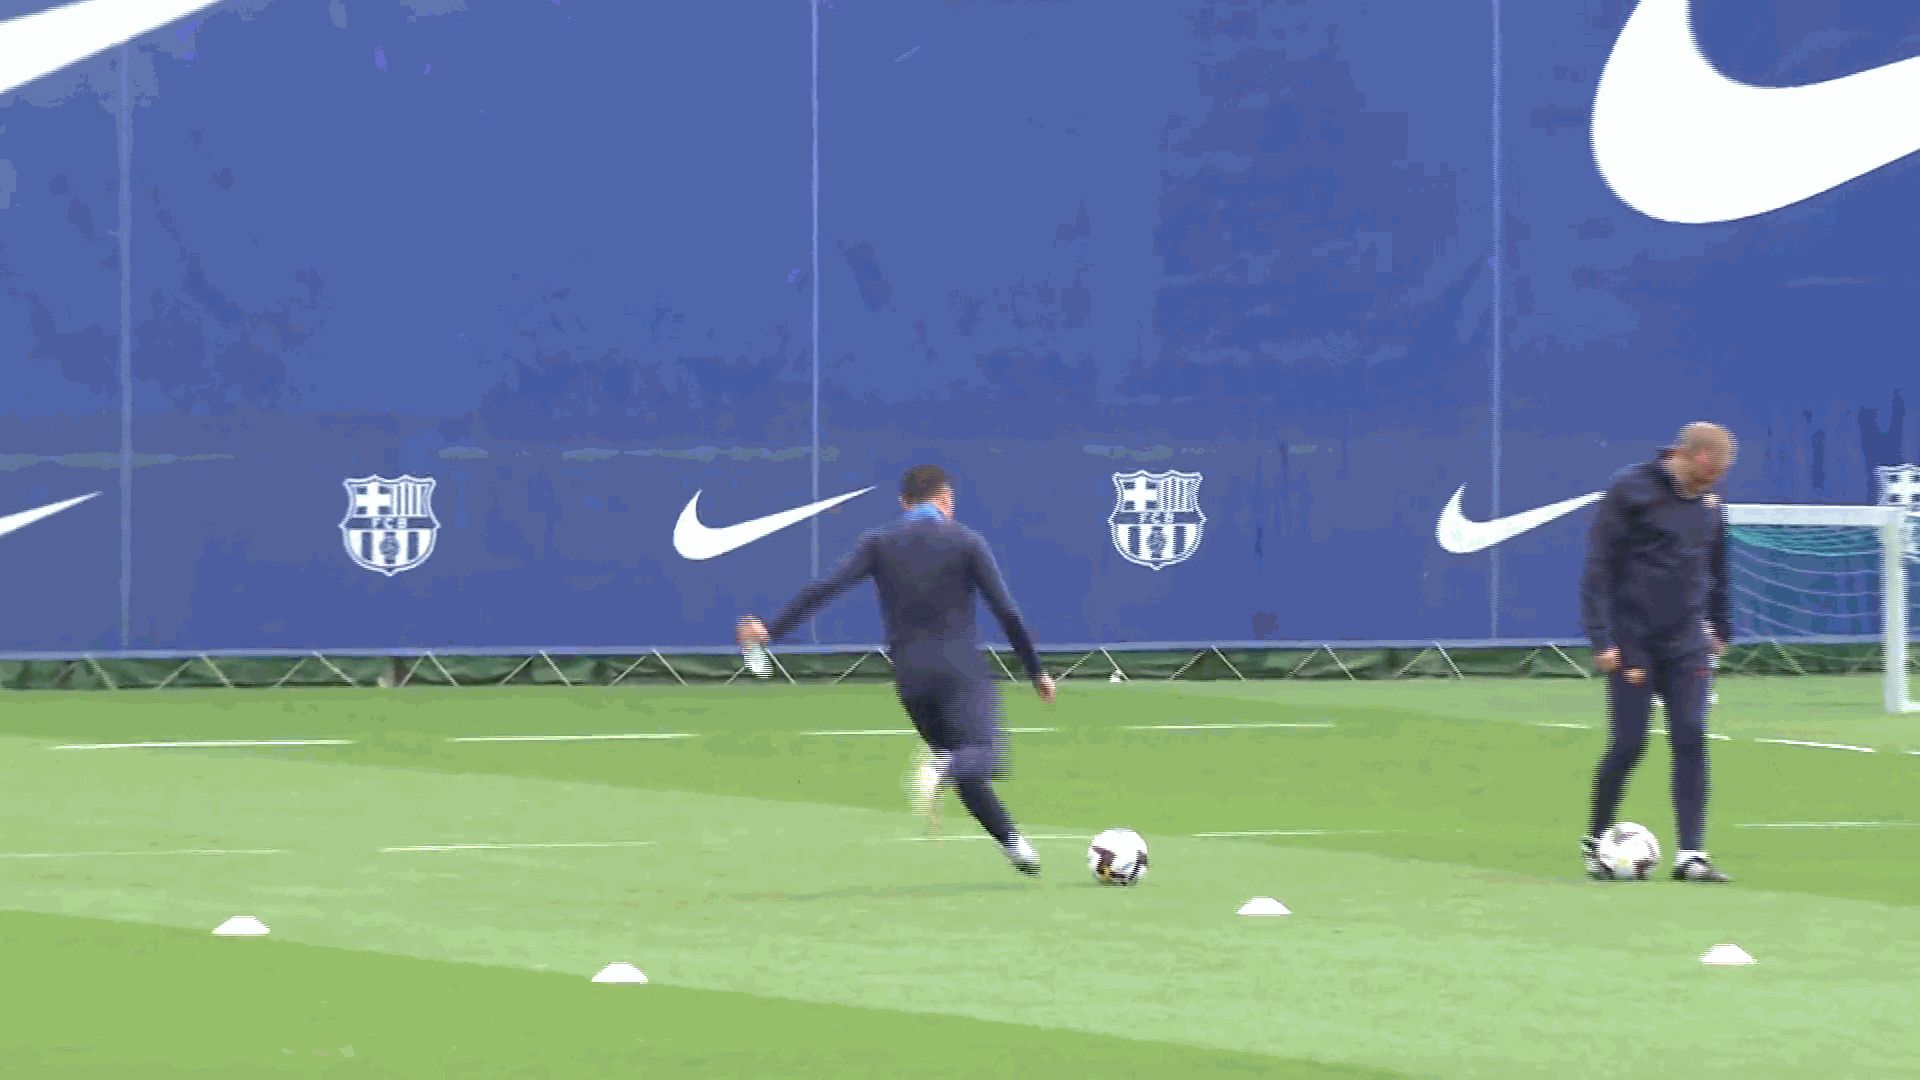 WATCH: Xavi Hernandez nails impressive trick shot during Barcelona training session